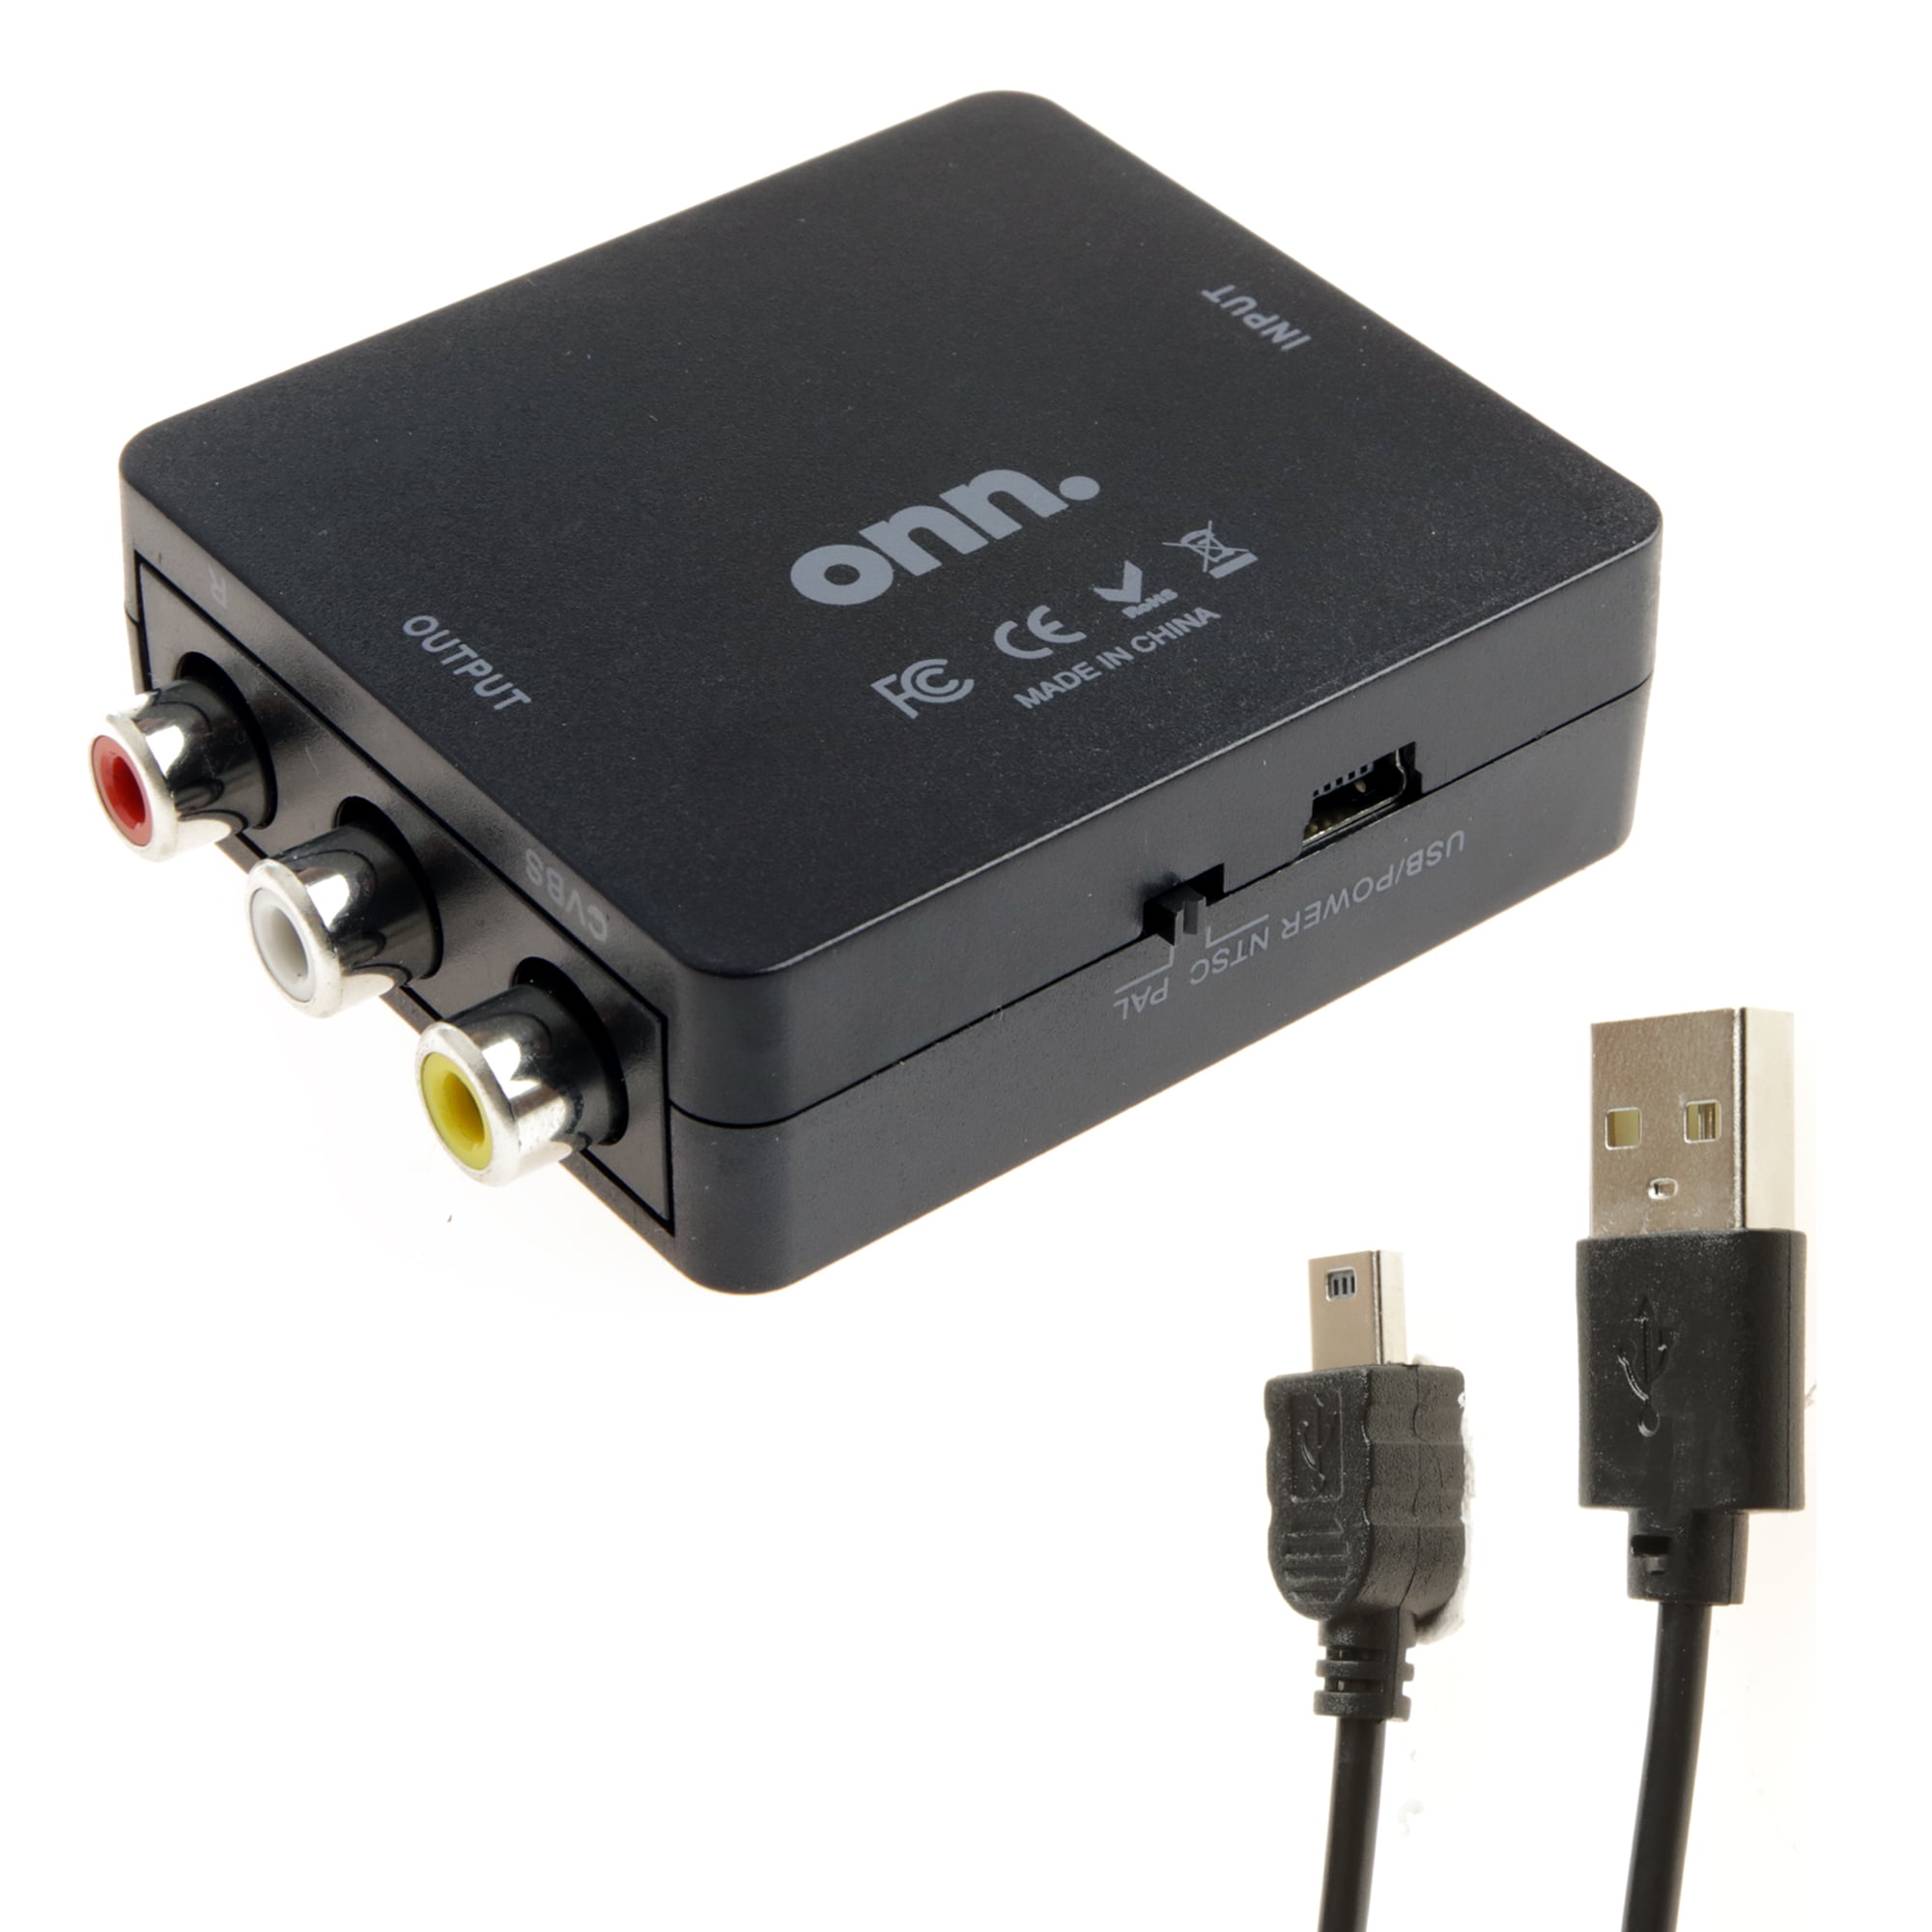 udtryk Symphony transfusion onn. HDMI to Composite AV Adapter - Walmart.com